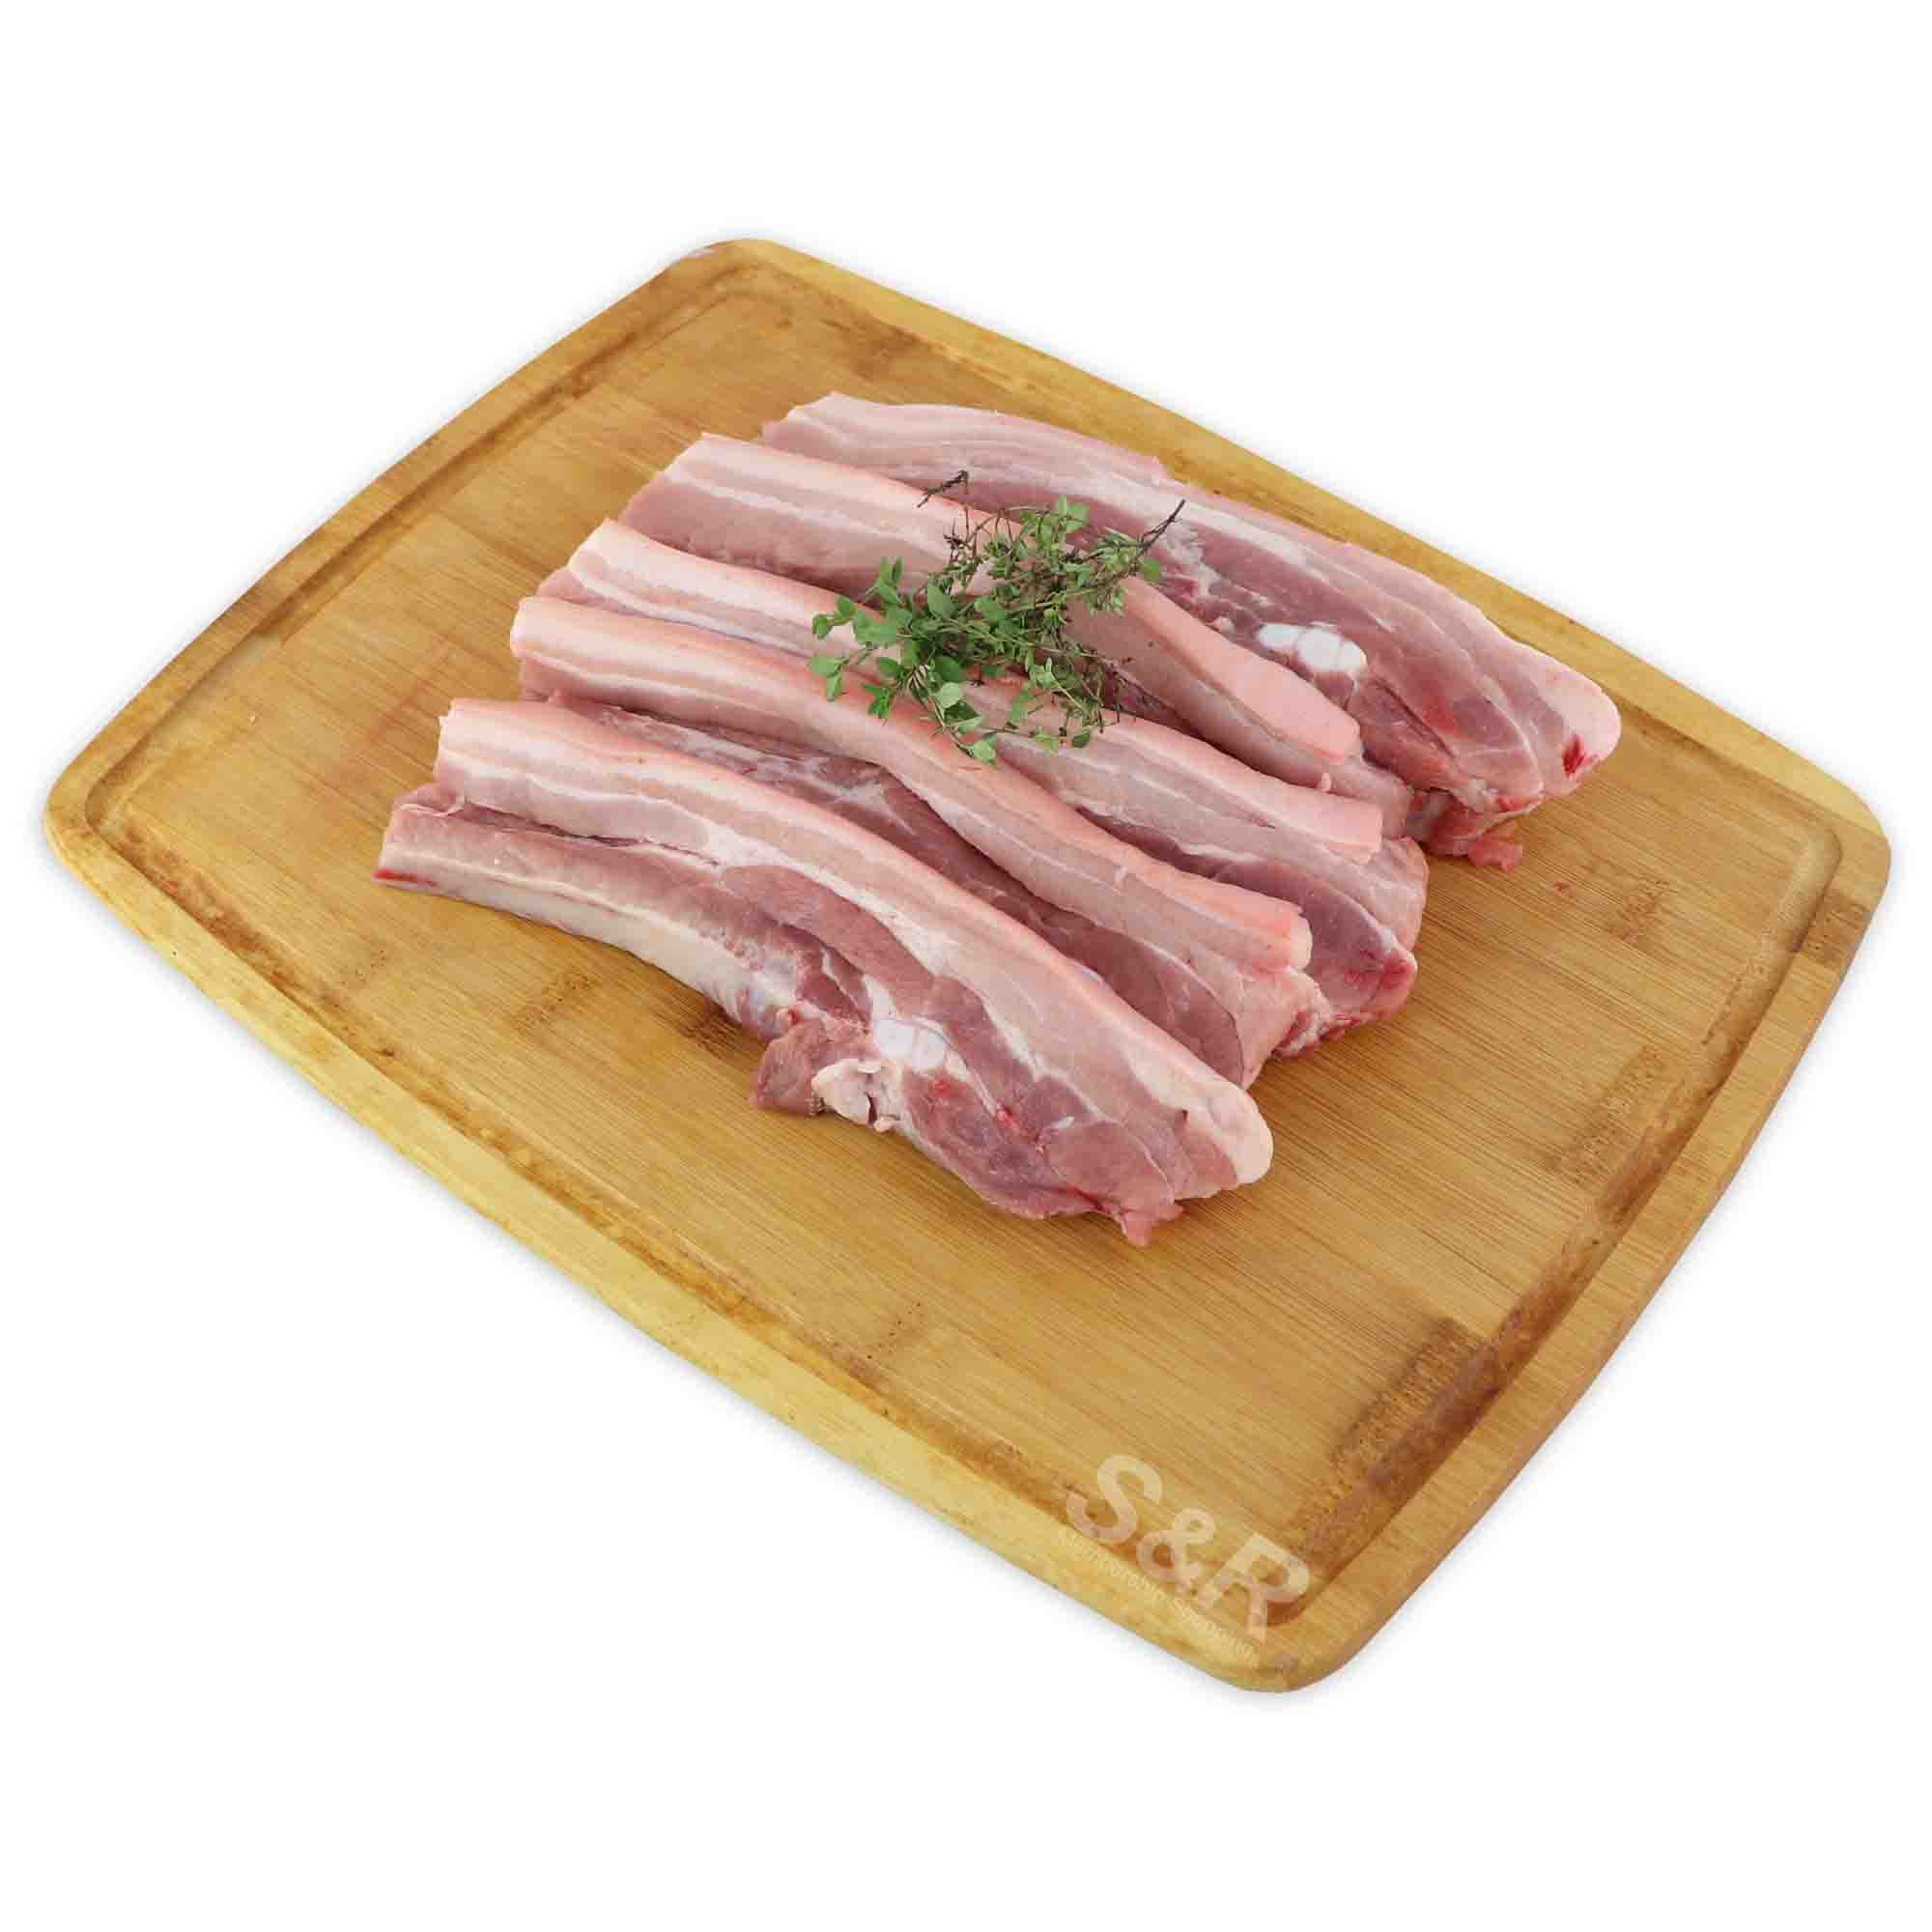 S&R Premium Pork Liempo approx. 1.7kg